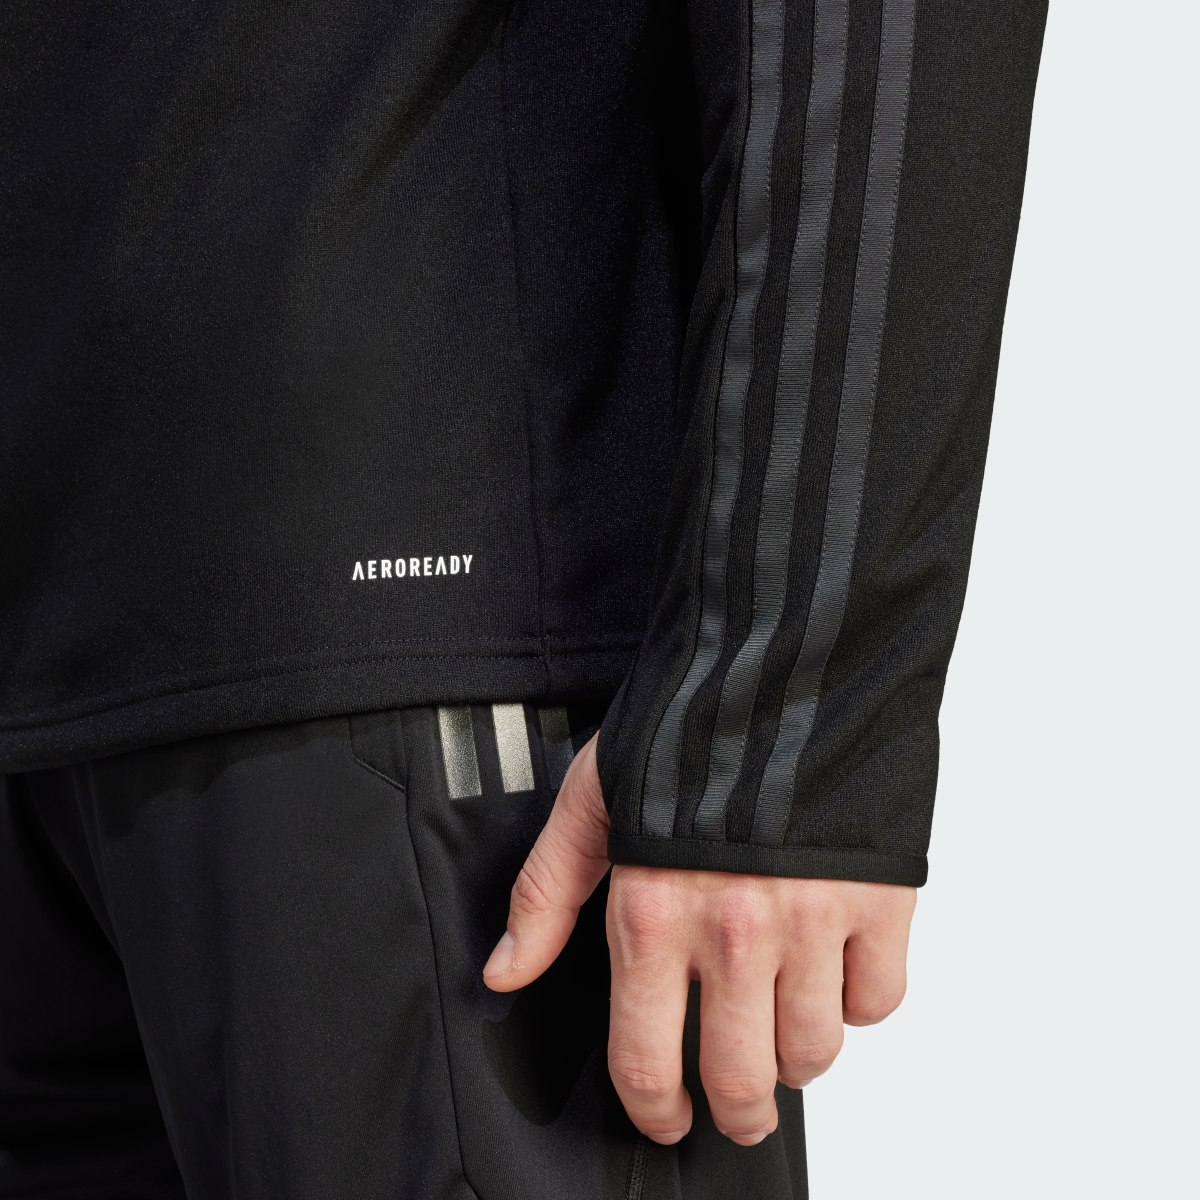 Adidas All Blacks AEROREADY Warming Long Sleeve Fleece Top. 7